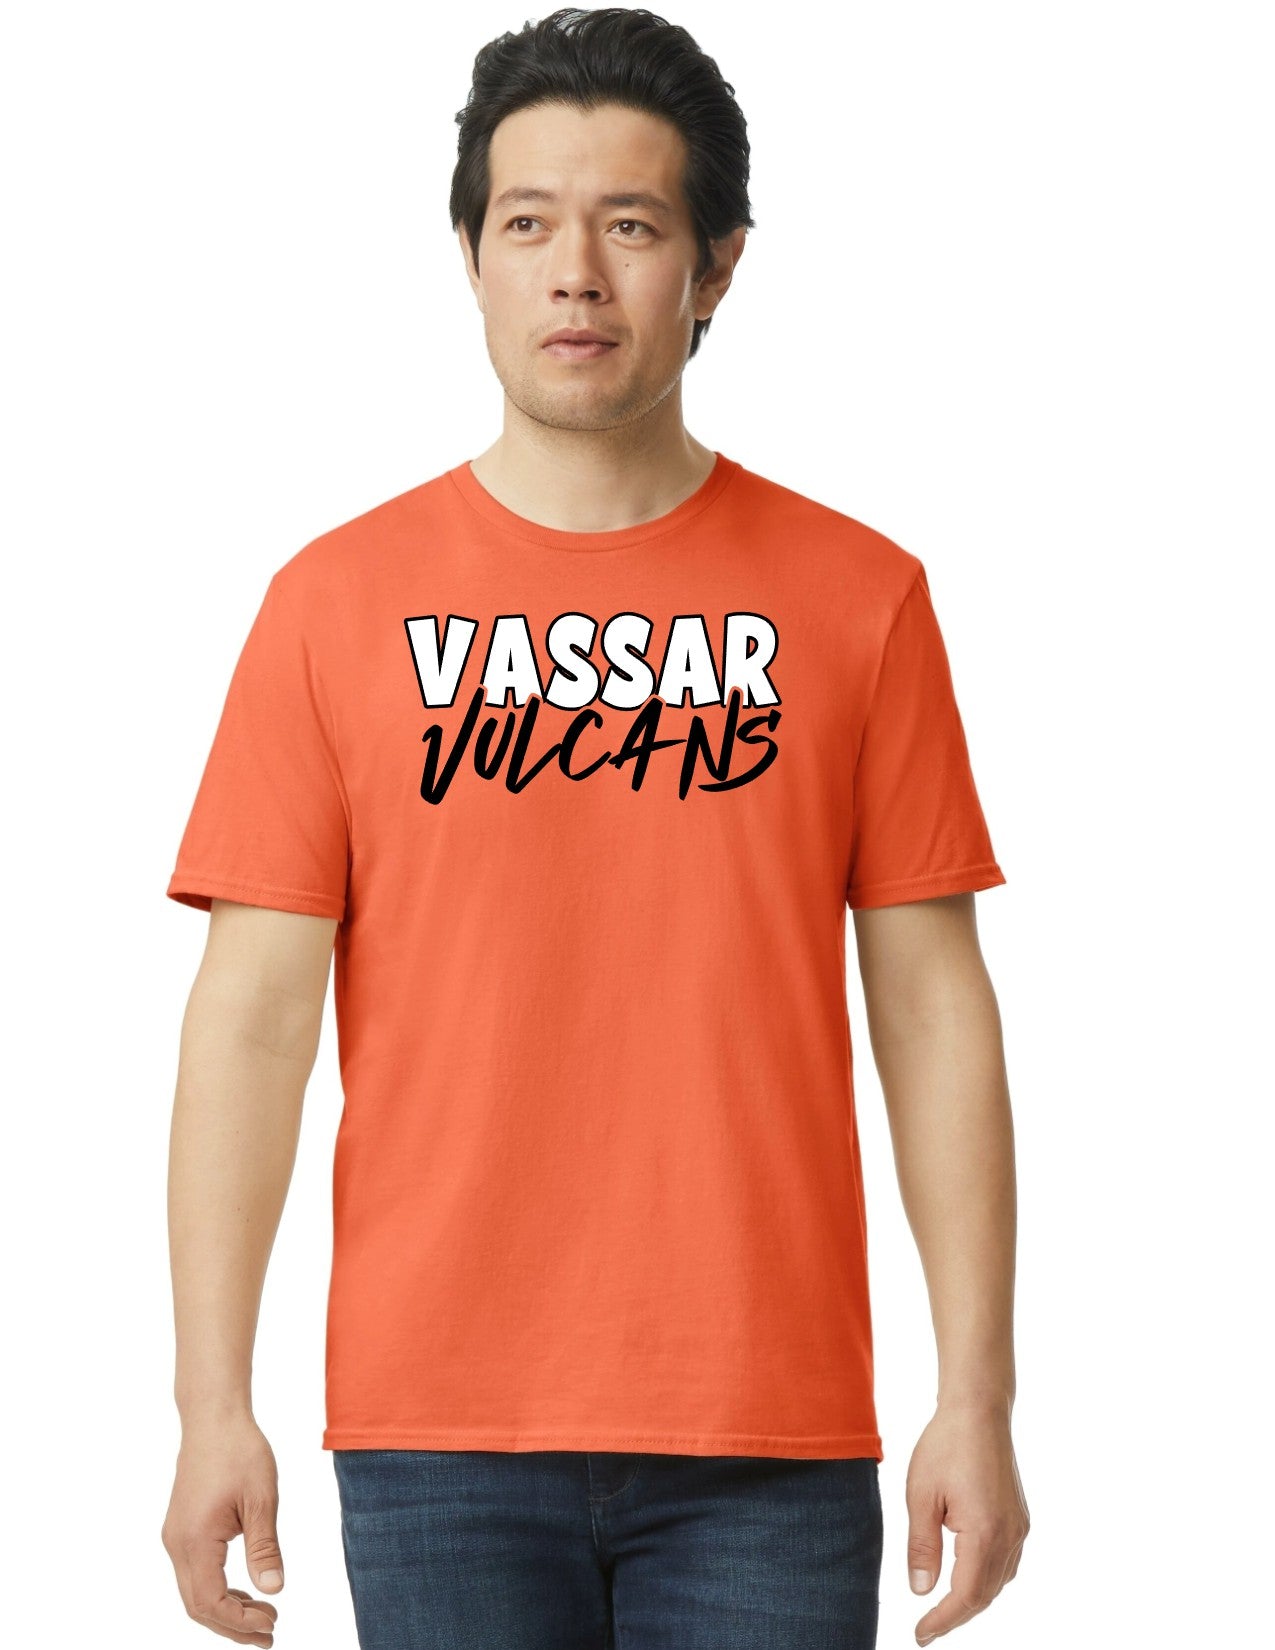 Vassar Vulcans unisex T-shirt (Adult)